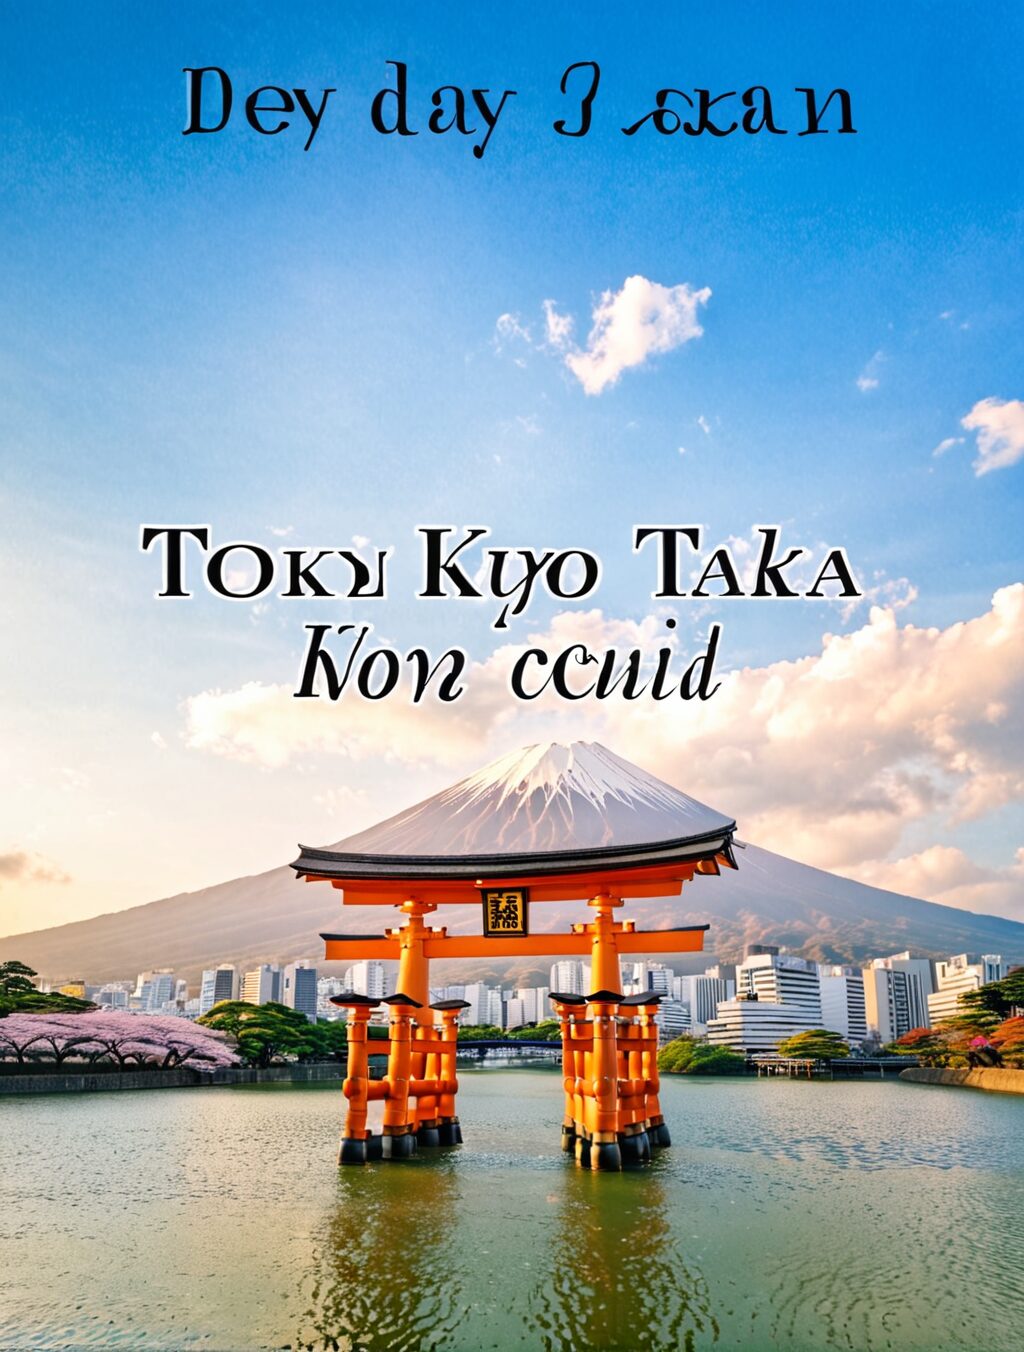 10 day japan itinerary tokyo kyoto osaka